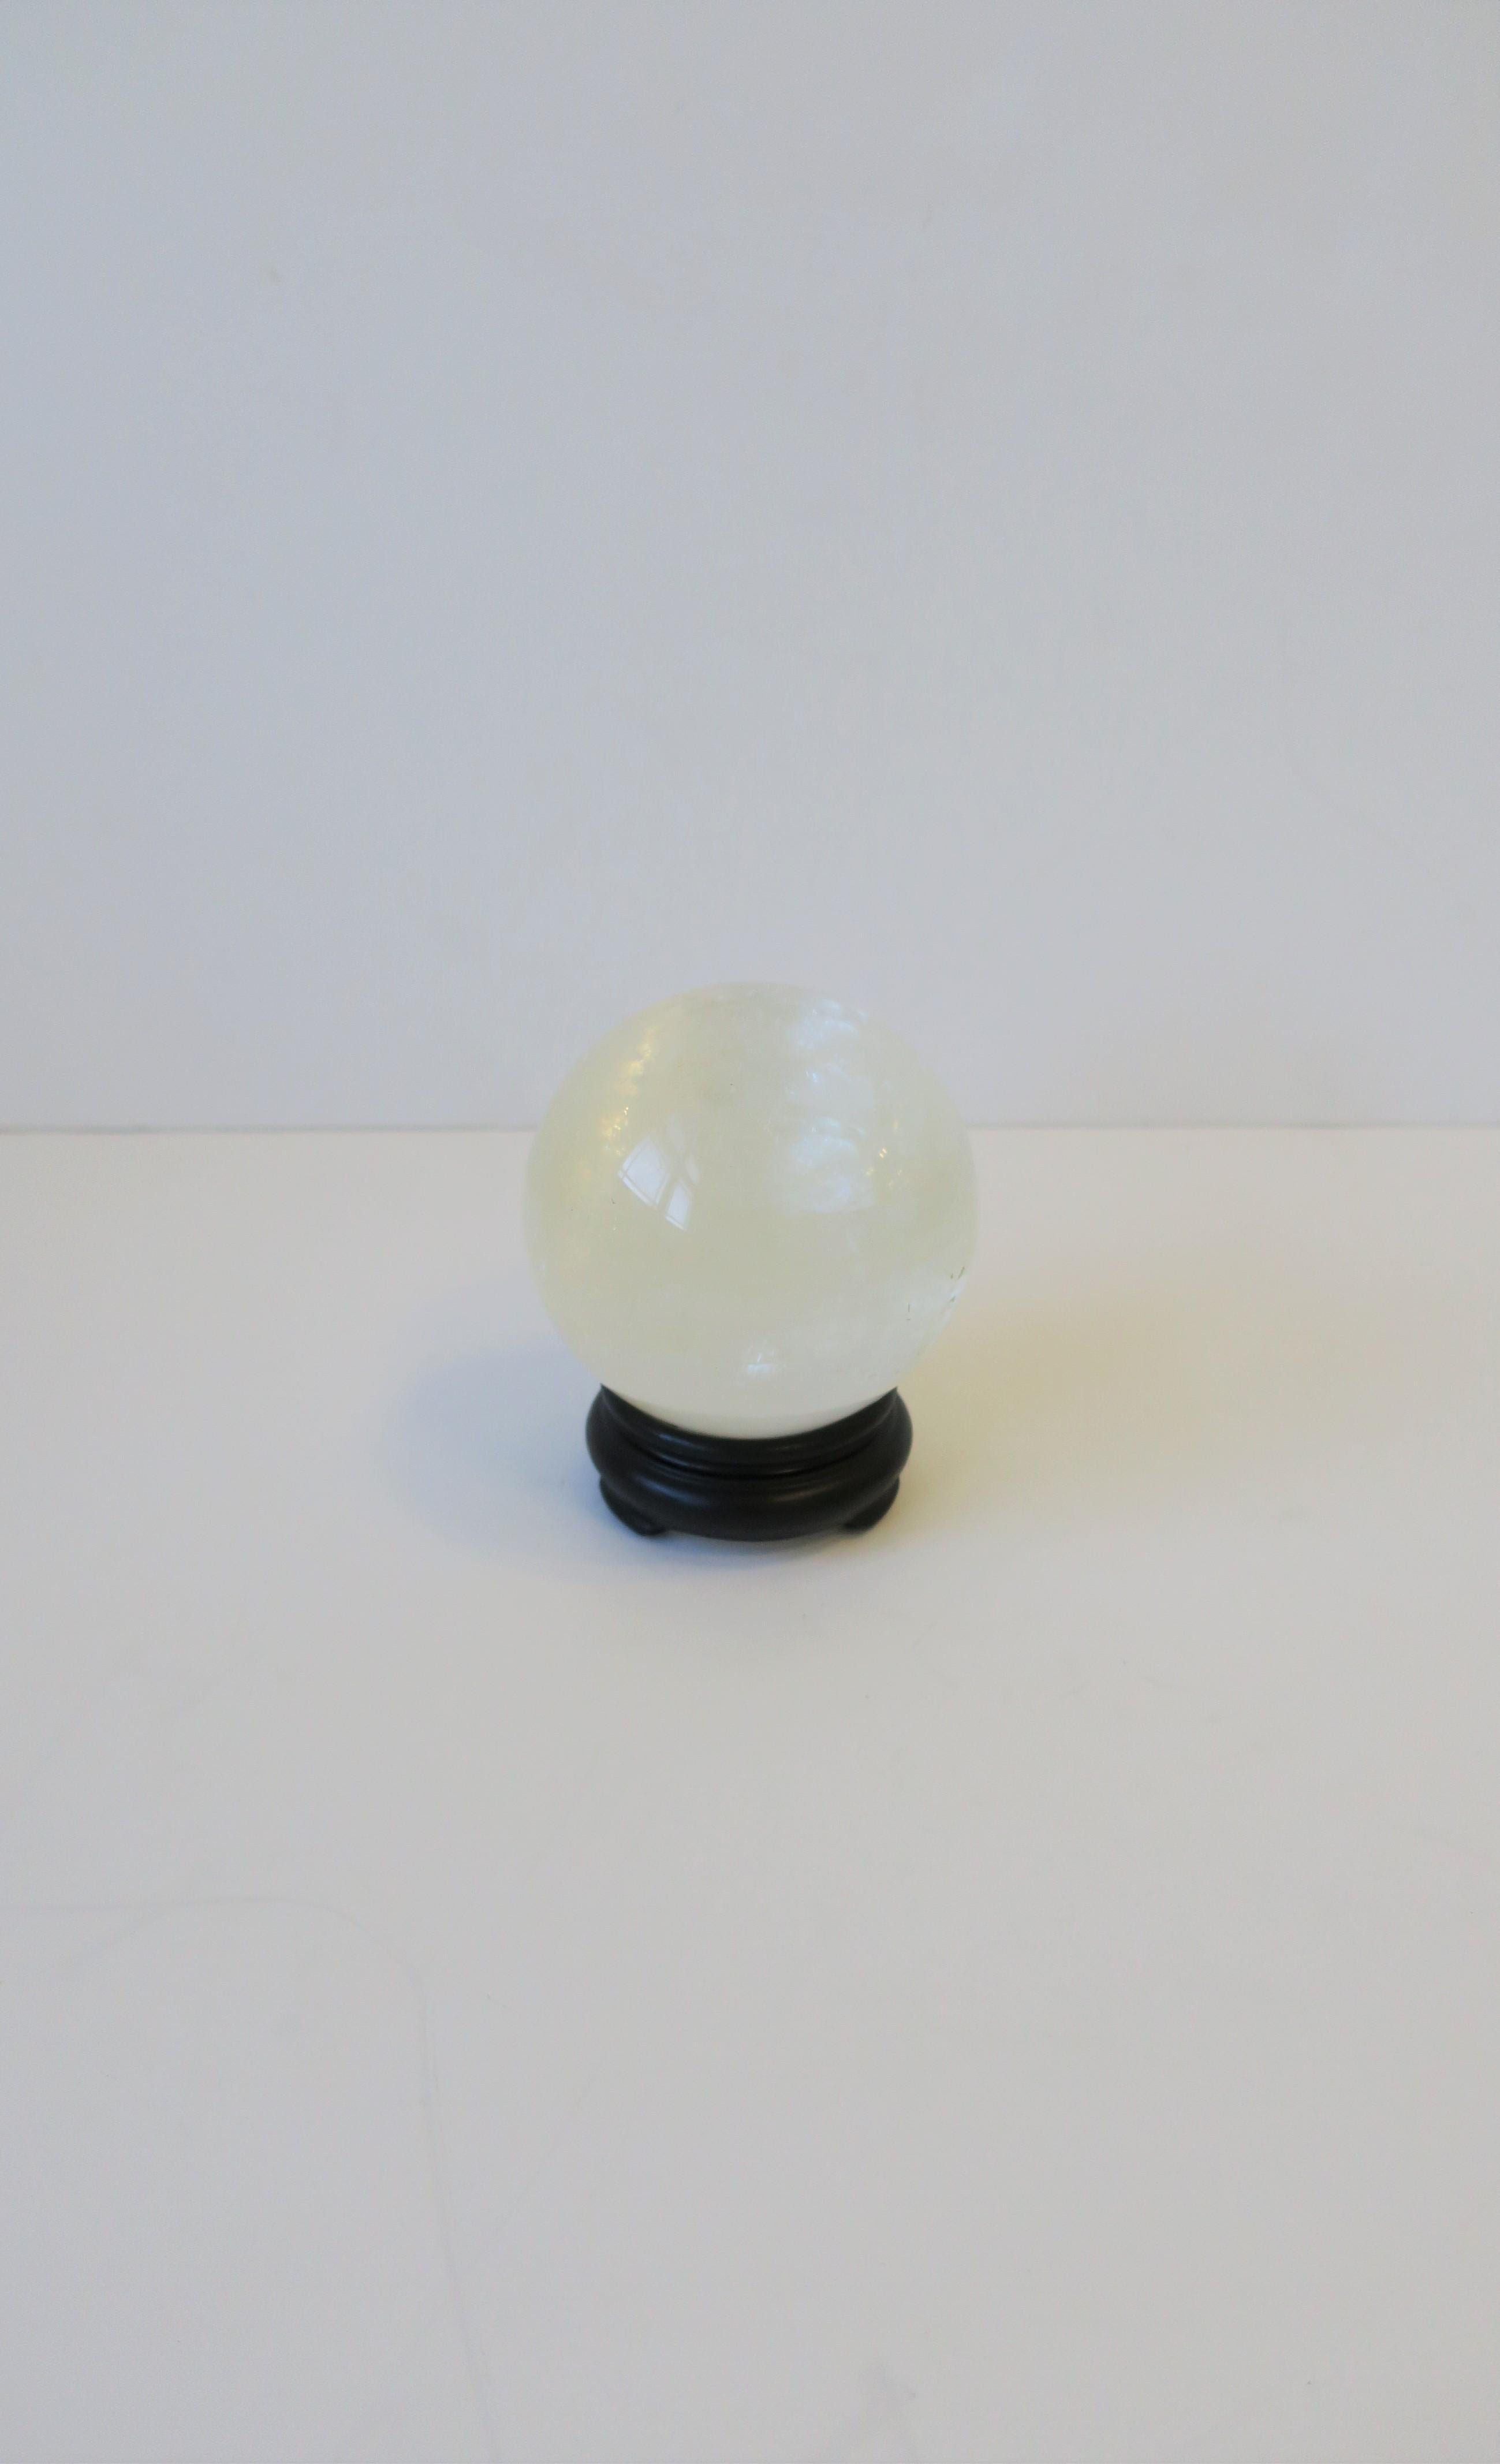 Polished Rock Crystal Decorative Sphere with Black Base